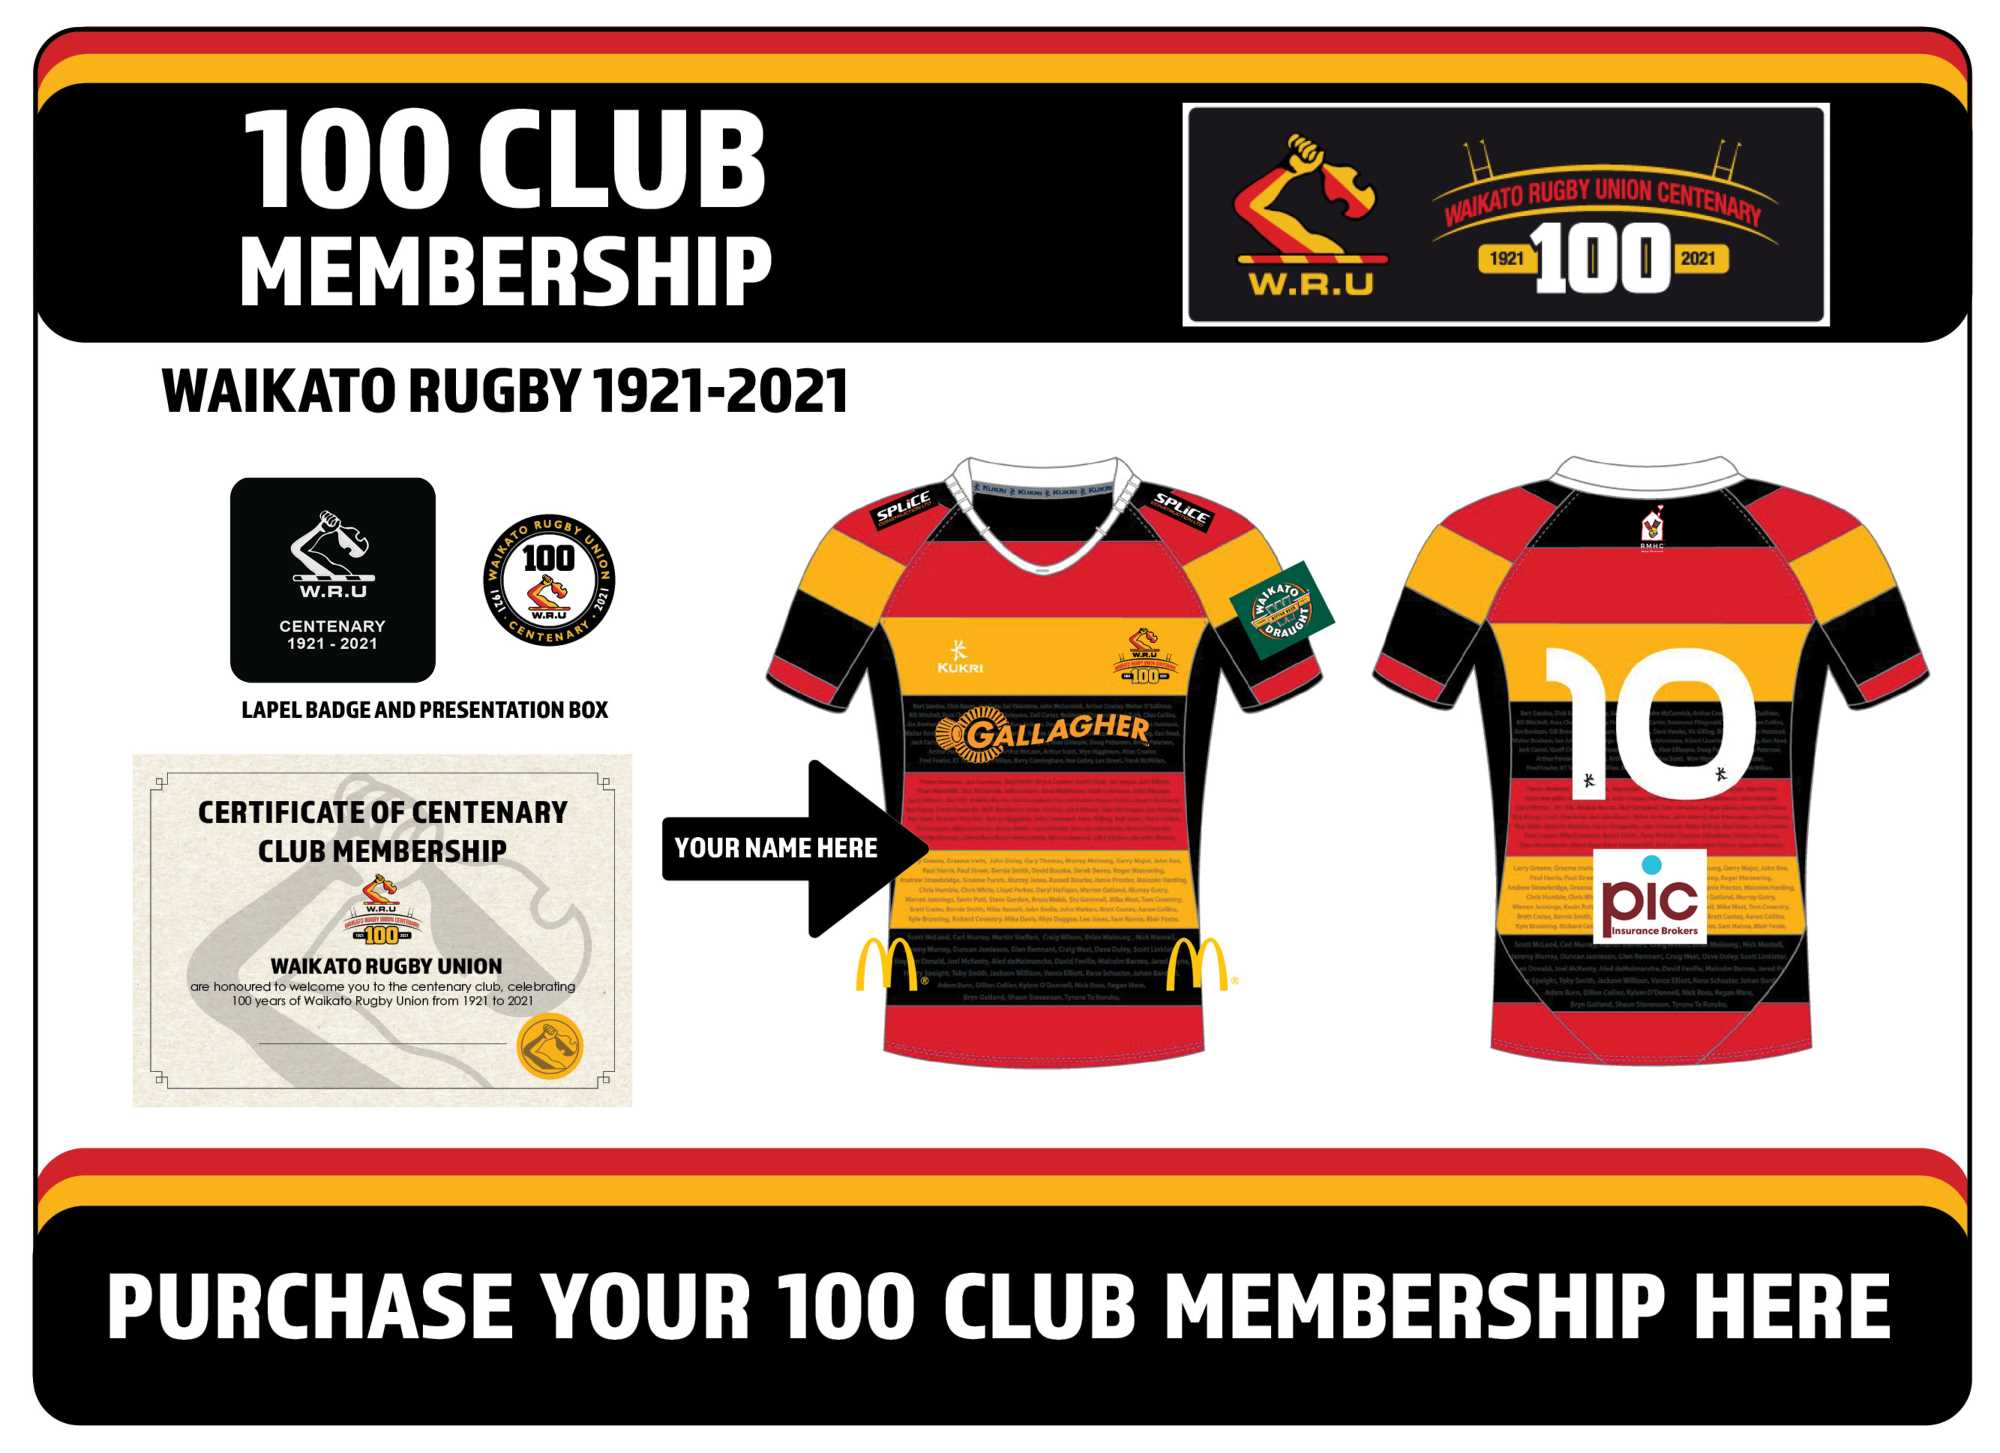 Waikato Rugby Union launch 100 Club Membership